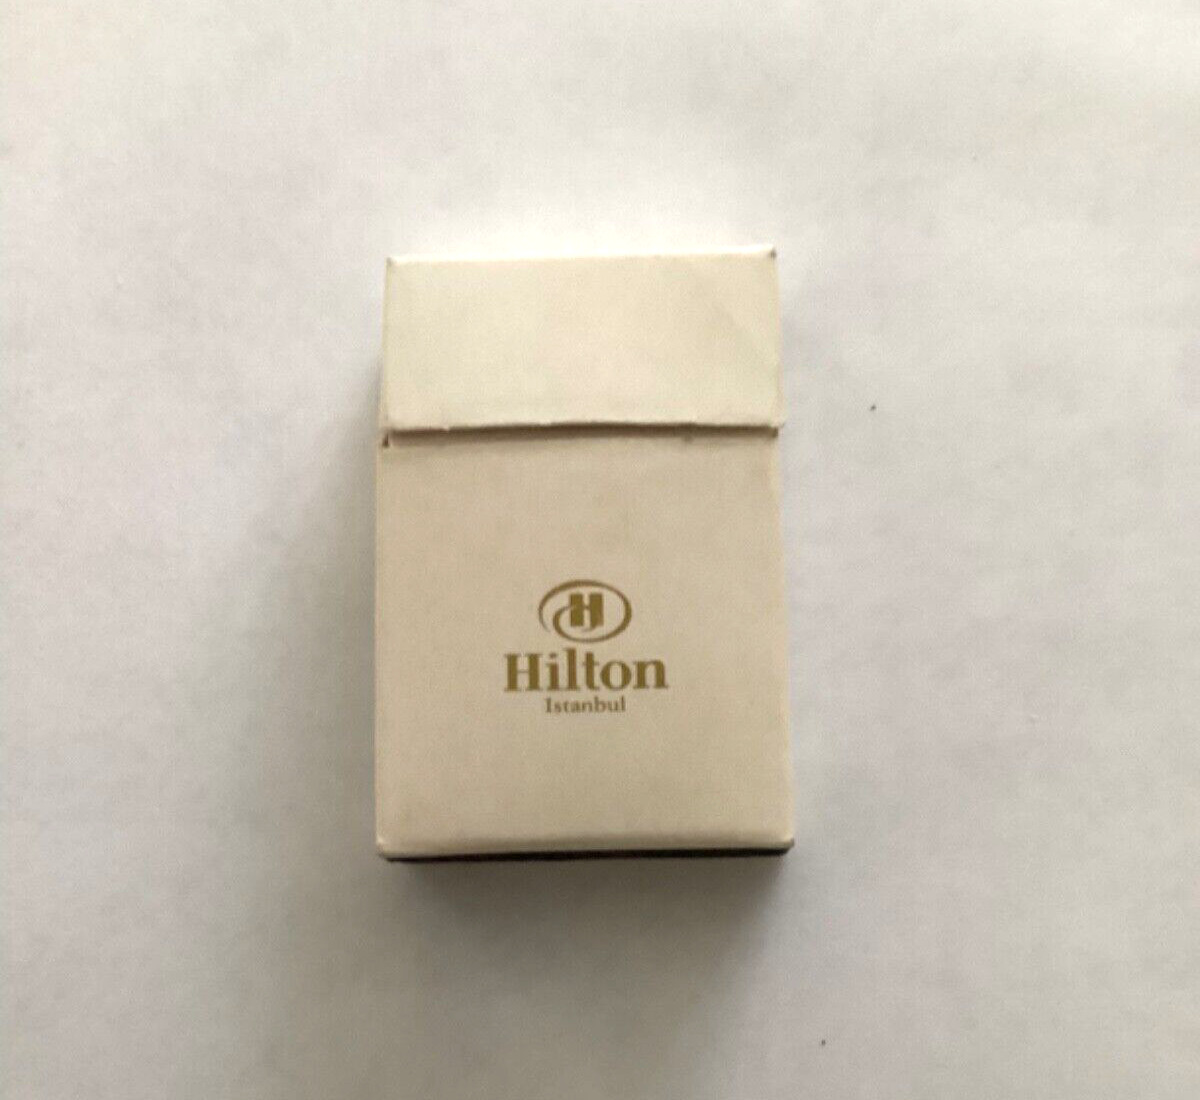 Vintage Hilton Istanbul Turkey Advertising Matchbox shaped like cigarette pack